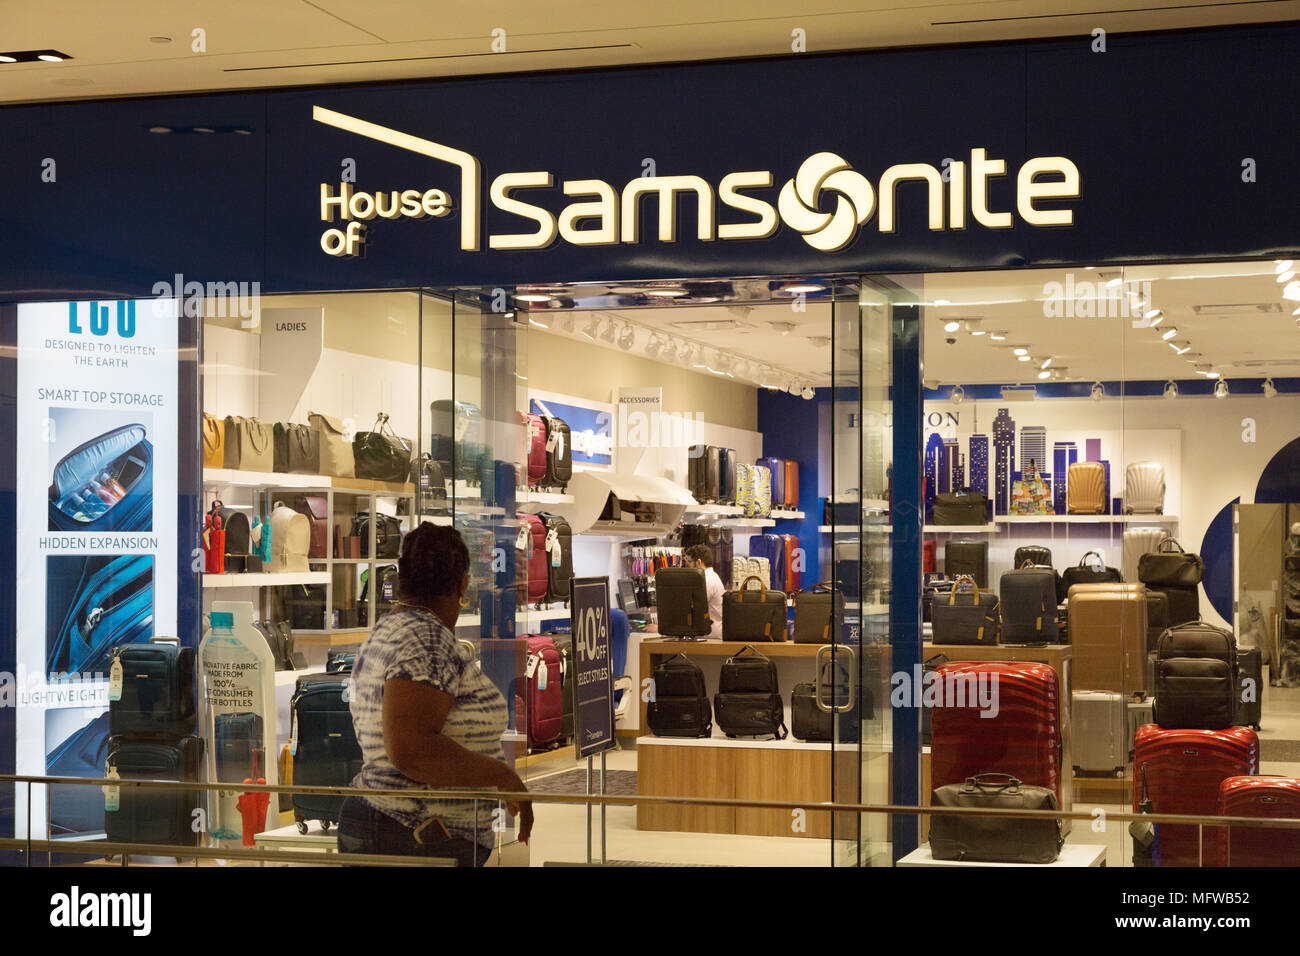 Samsonite store in The Houston Galleria mall, Houston Texas USA Stock Photo